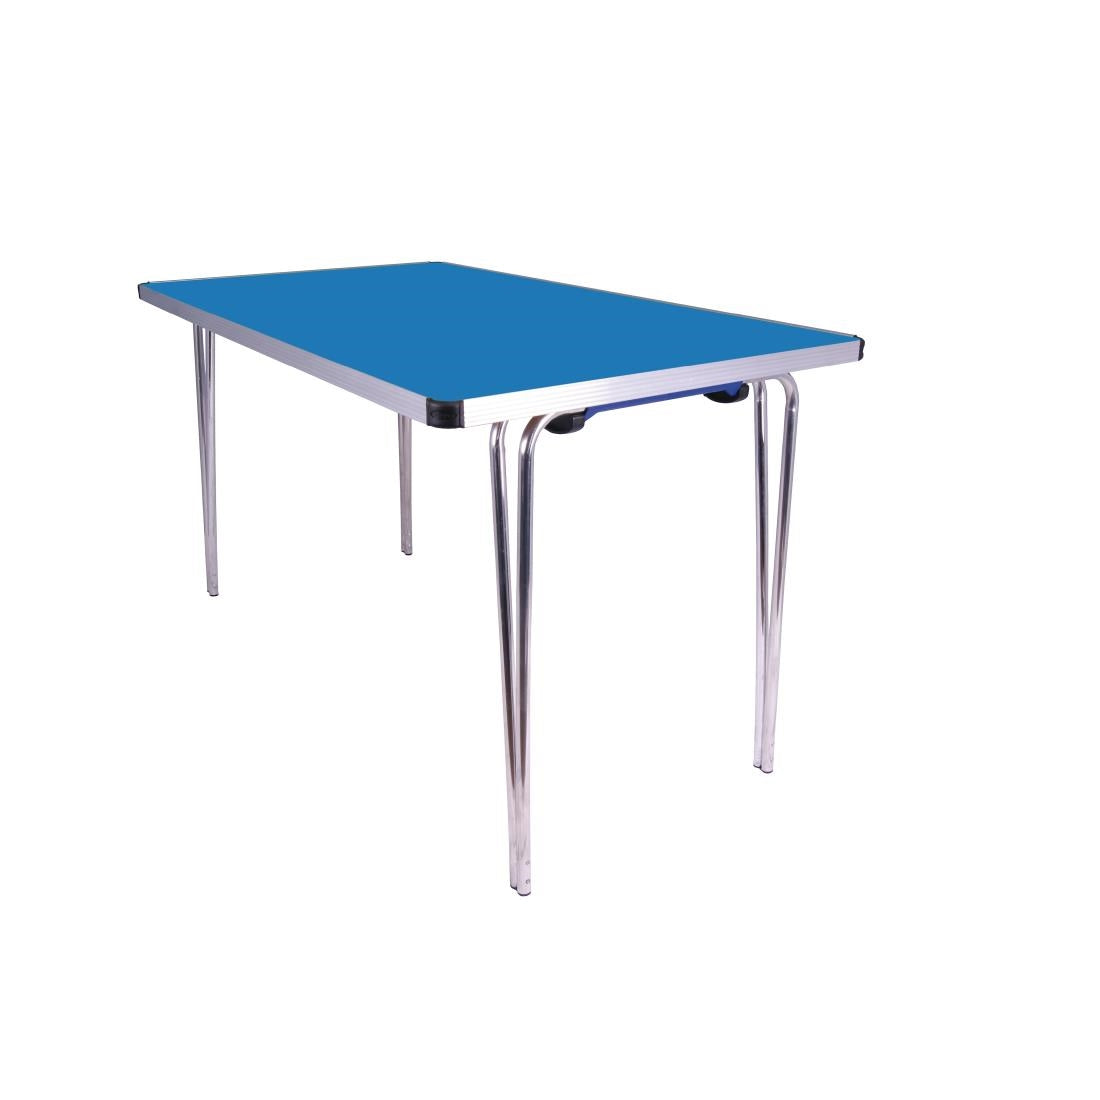 DM945 Gopak Contour Folding Table Blue 4ft JD Catering Equipment Solutions Ltd